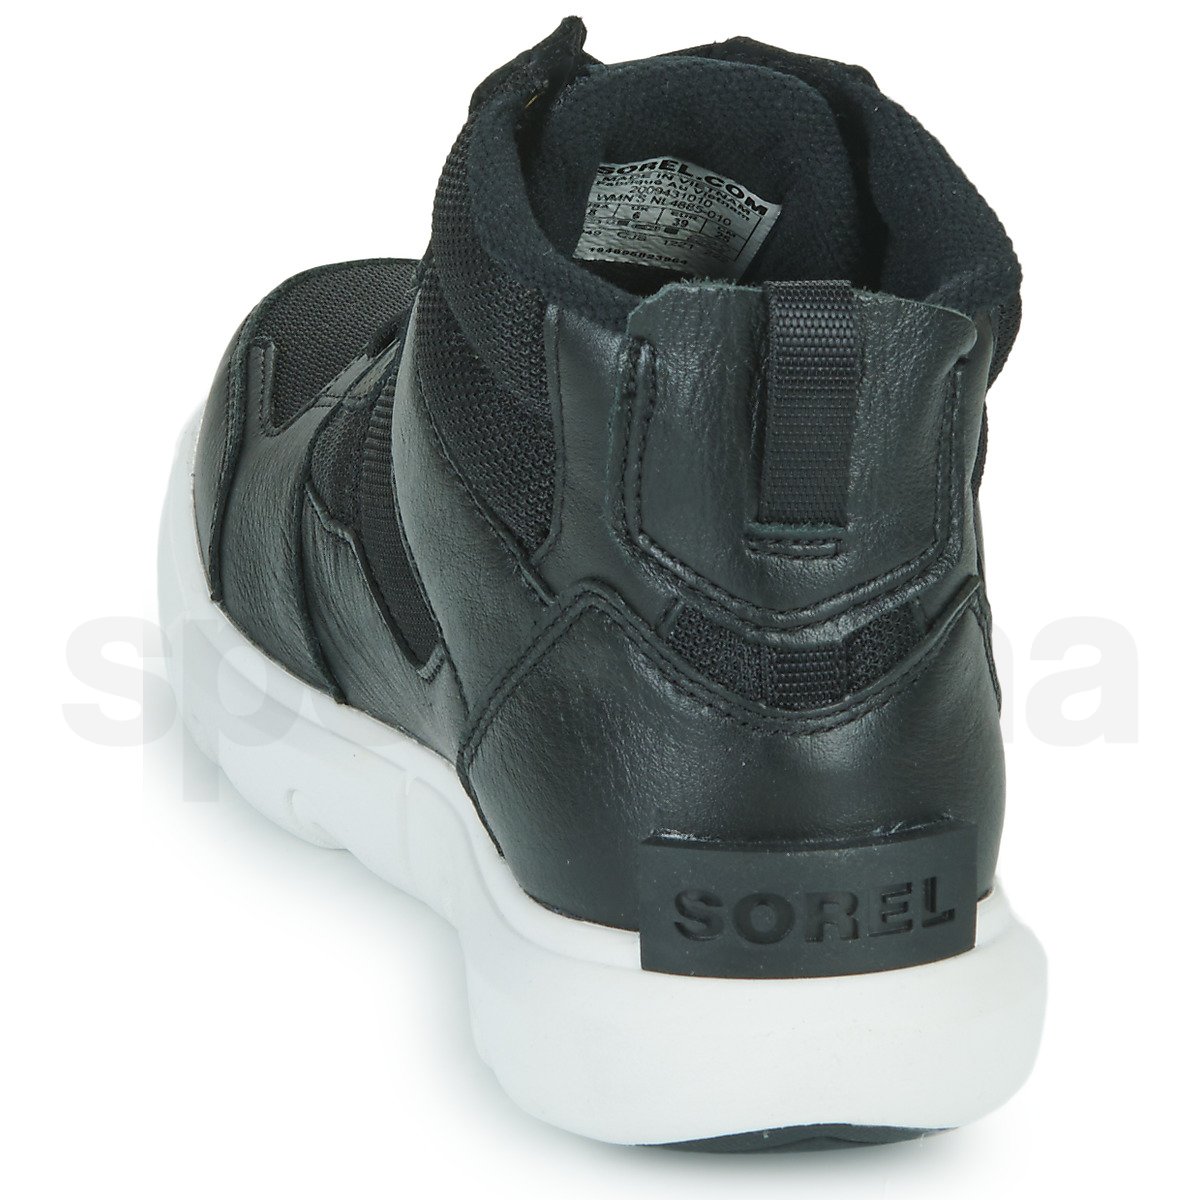 Obuv Sorel Explorer™ II Sneaker Mid WP W - černá/bílá